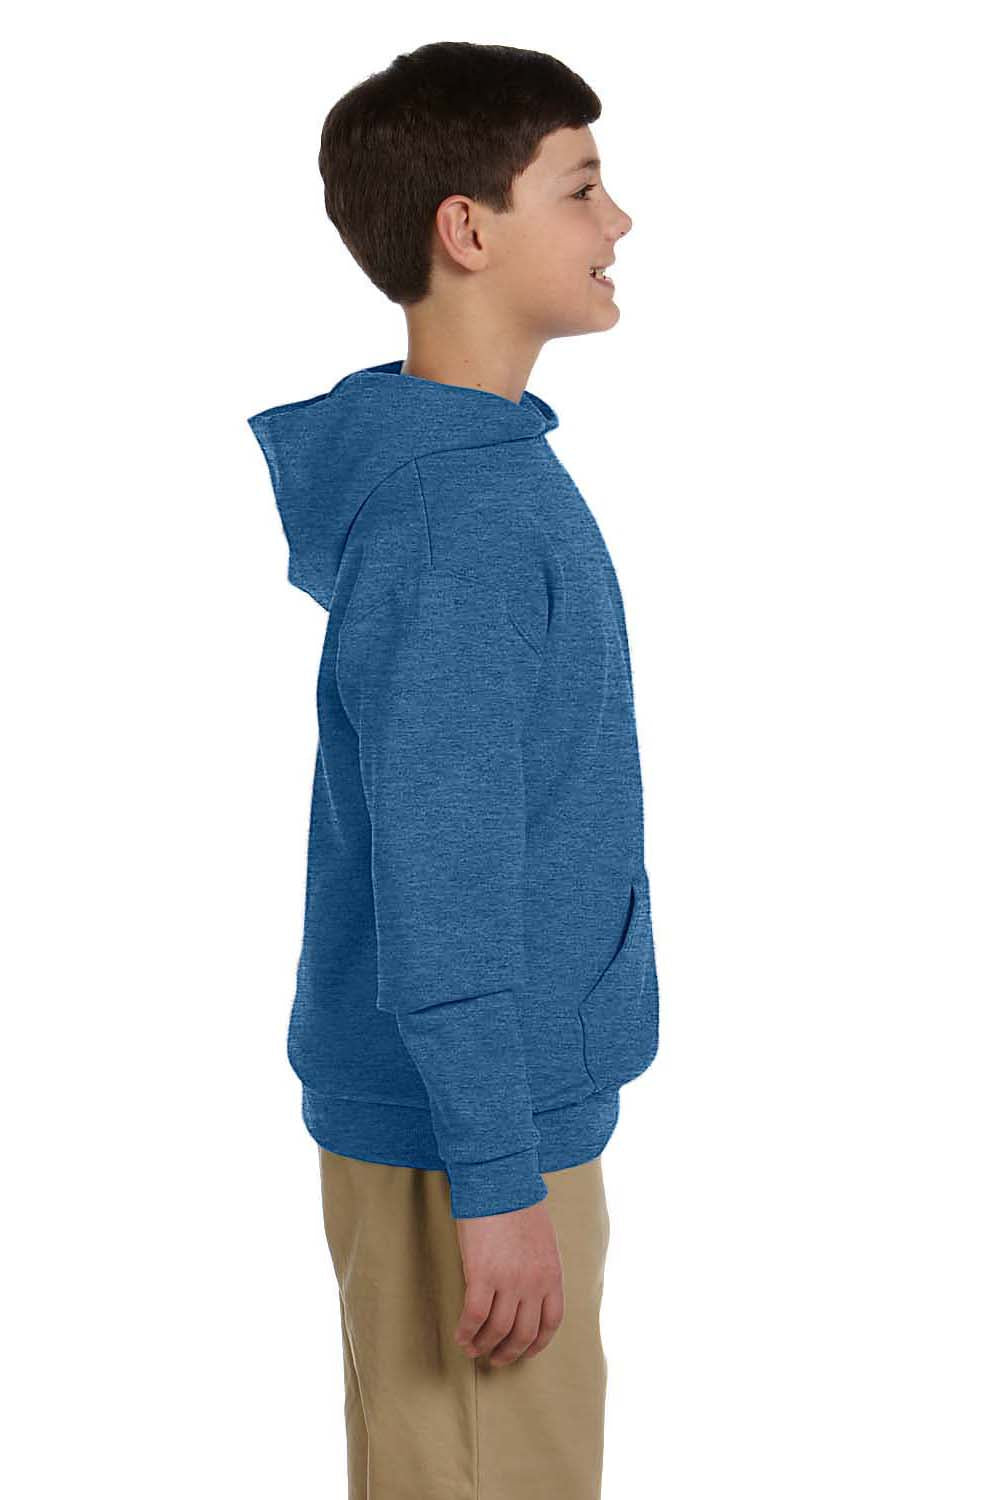 Jerzees 996Y Youth NuBlend Fleece Hooded Sweatshirt Hoodie Heather Blue Side